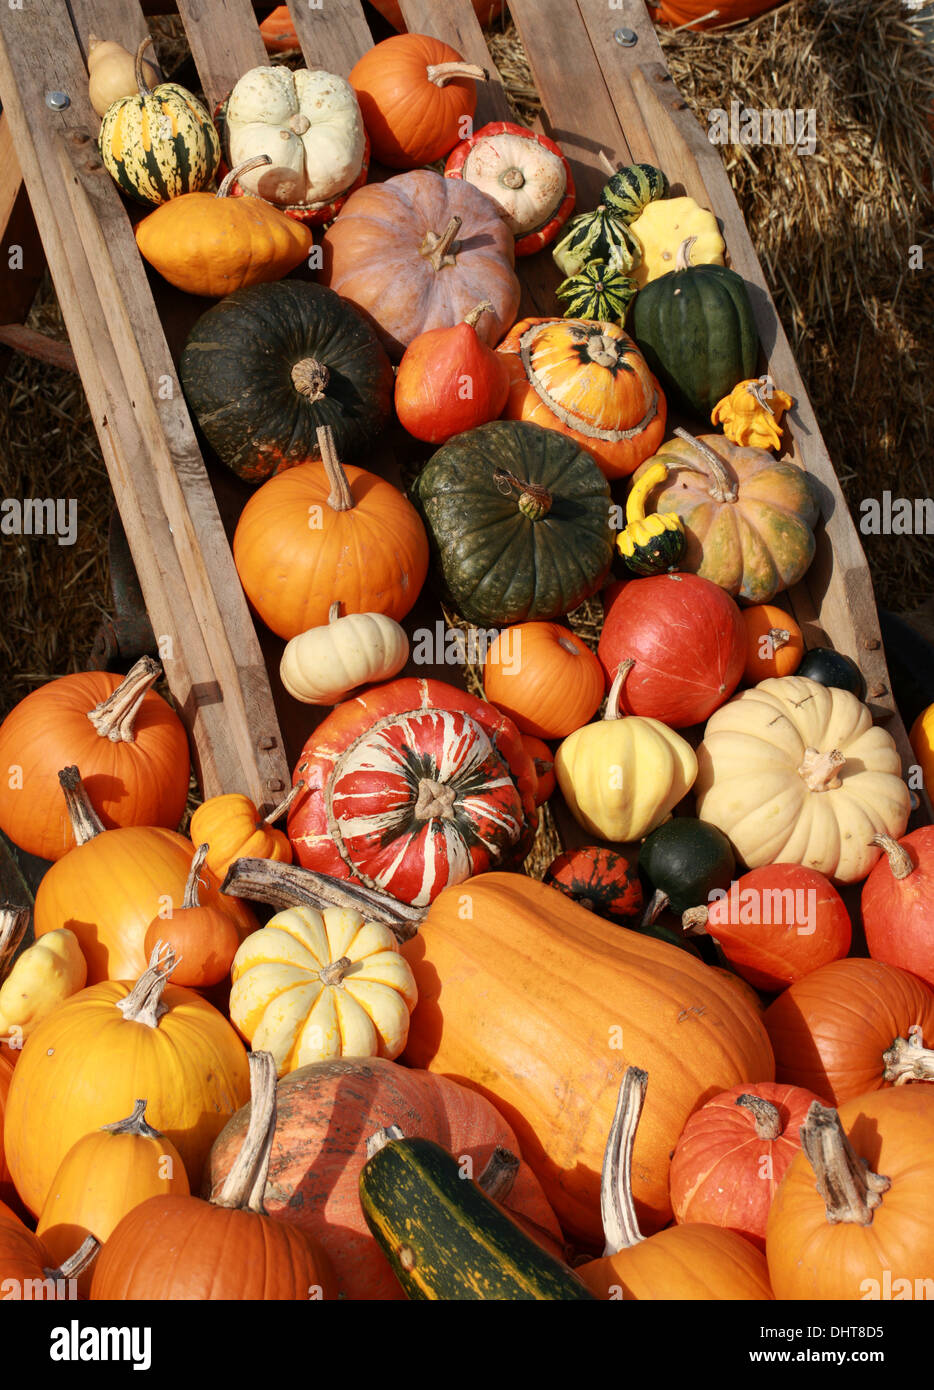 A Collection of Pumpkins and Squashes, Cucurbita pepo, Cucurbitaceae. Aka Summer Squash, Winter Squash. Stock Photo